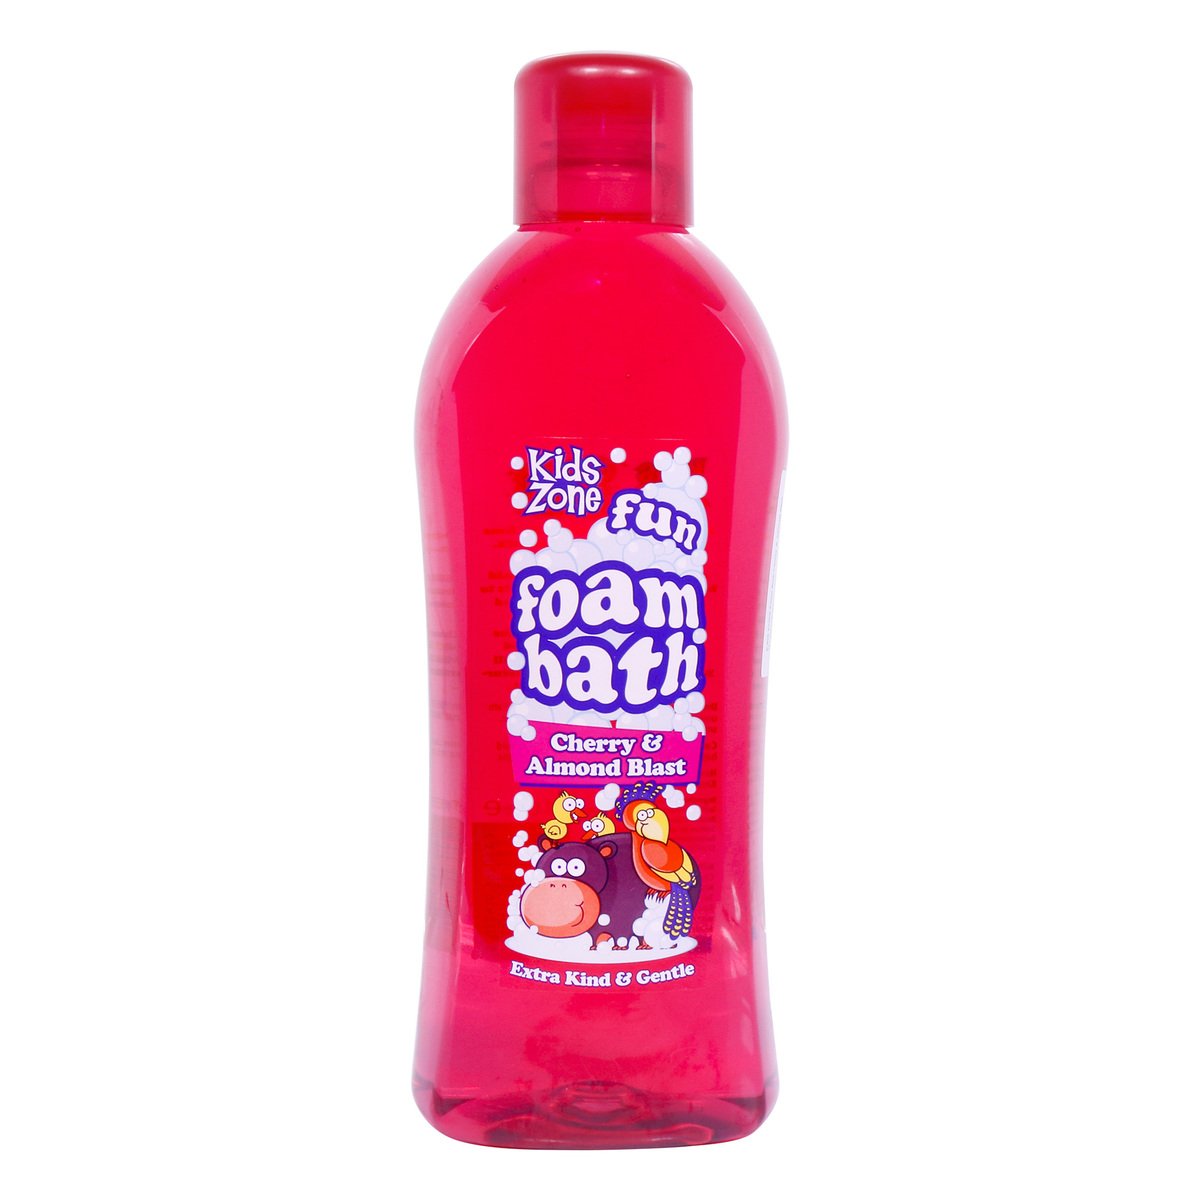 Kids Zone Fun Foam Bath Cherry & Almond Blast 1Litre